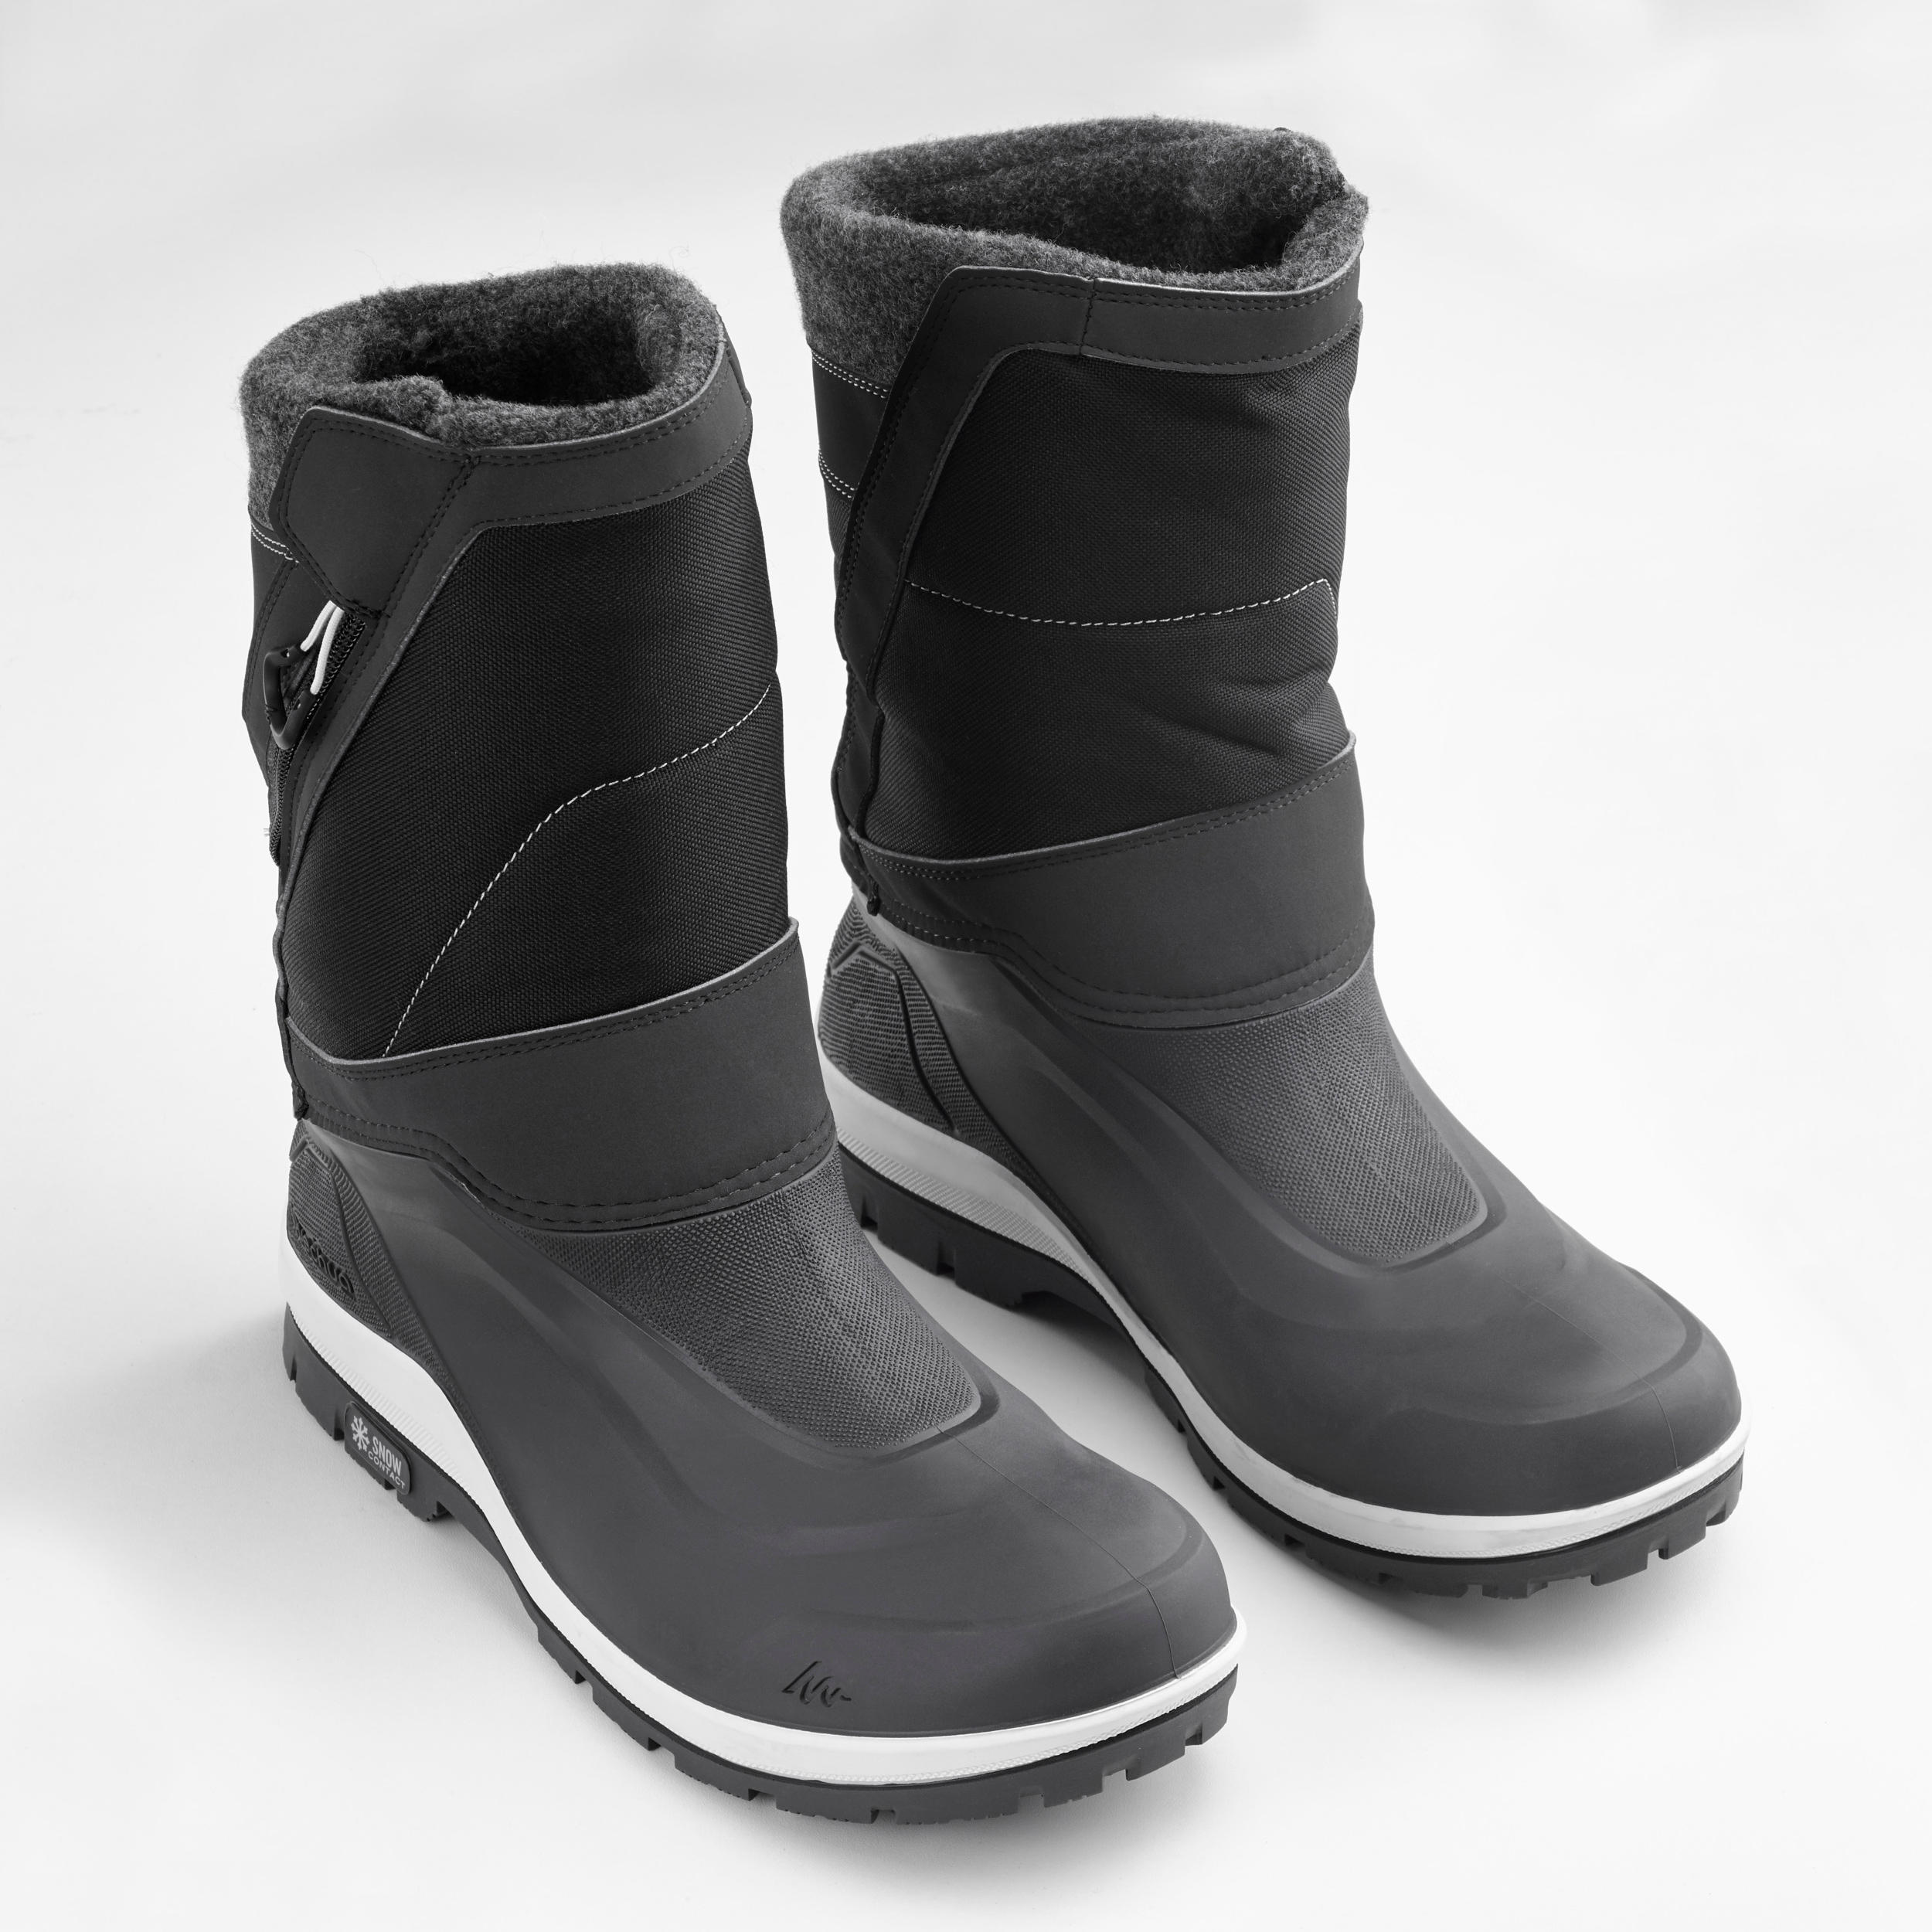 snow boots waterproof mens